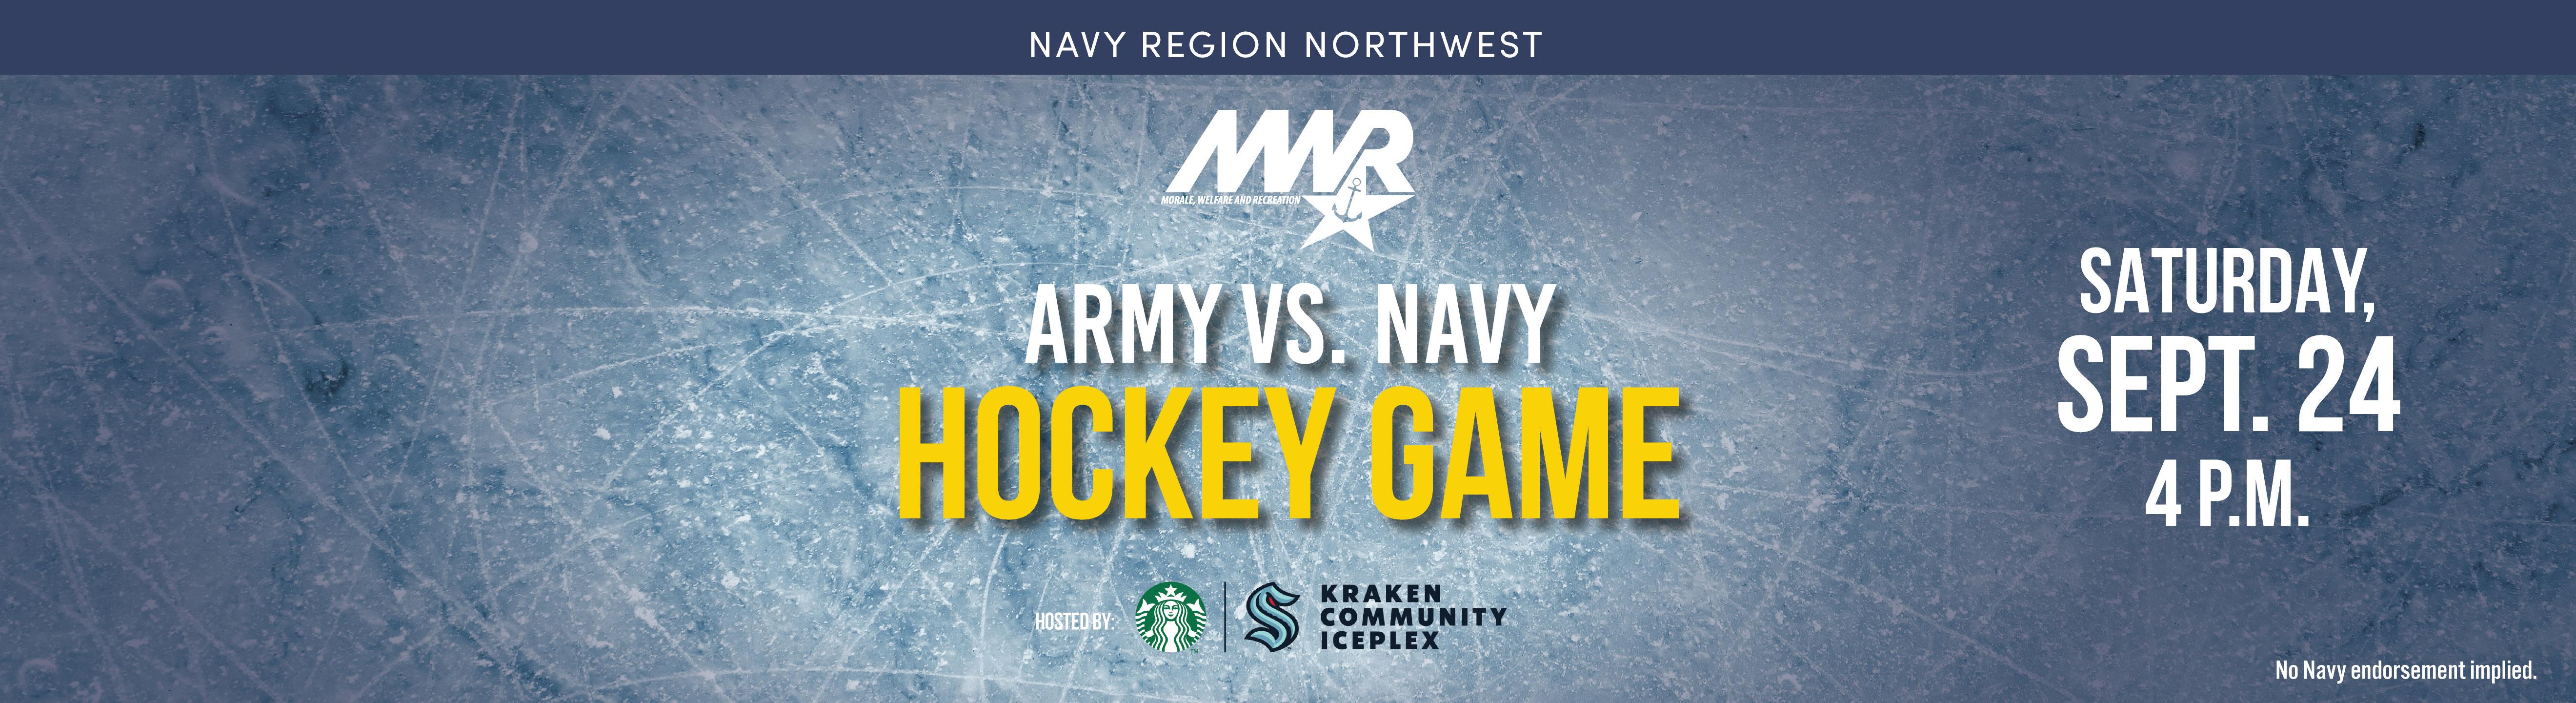 RE-SFA-Army-vs-Navy-Hockey-Game_hero.jpg